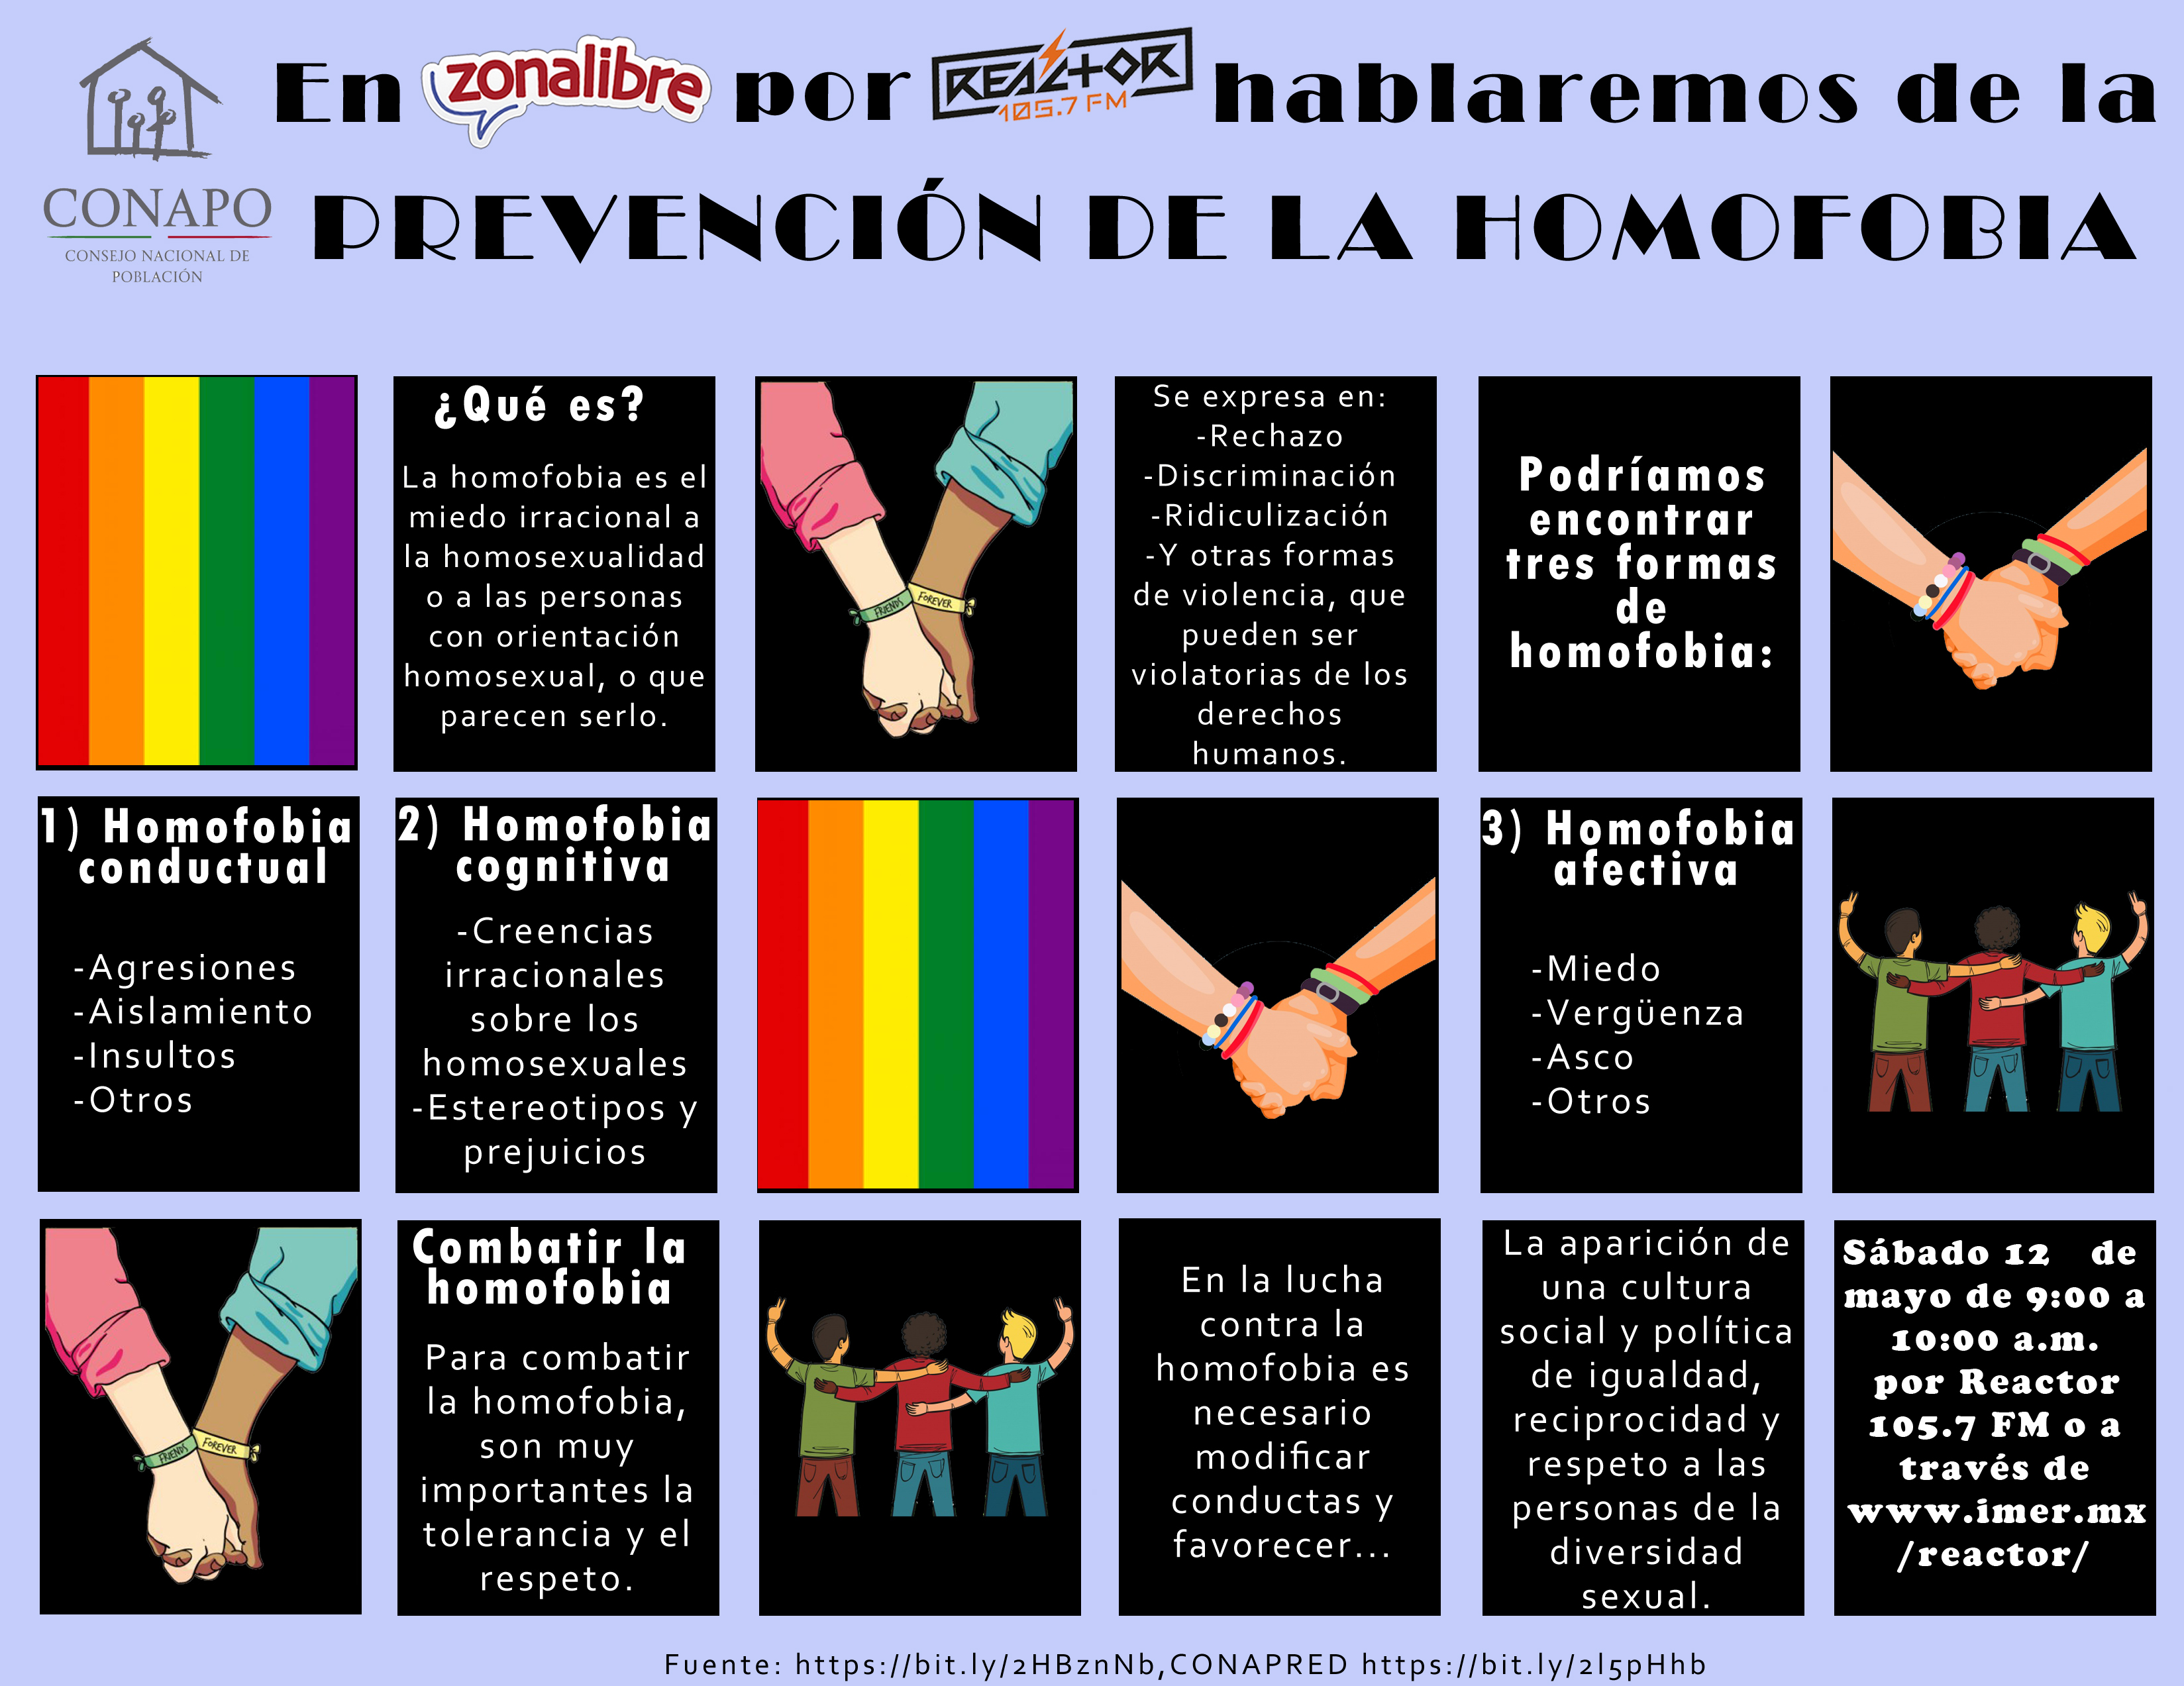 /cms/uploads/image/file/399971/Infograf_a_Prevenci_n_de_la_homofobia_12052018.jpg